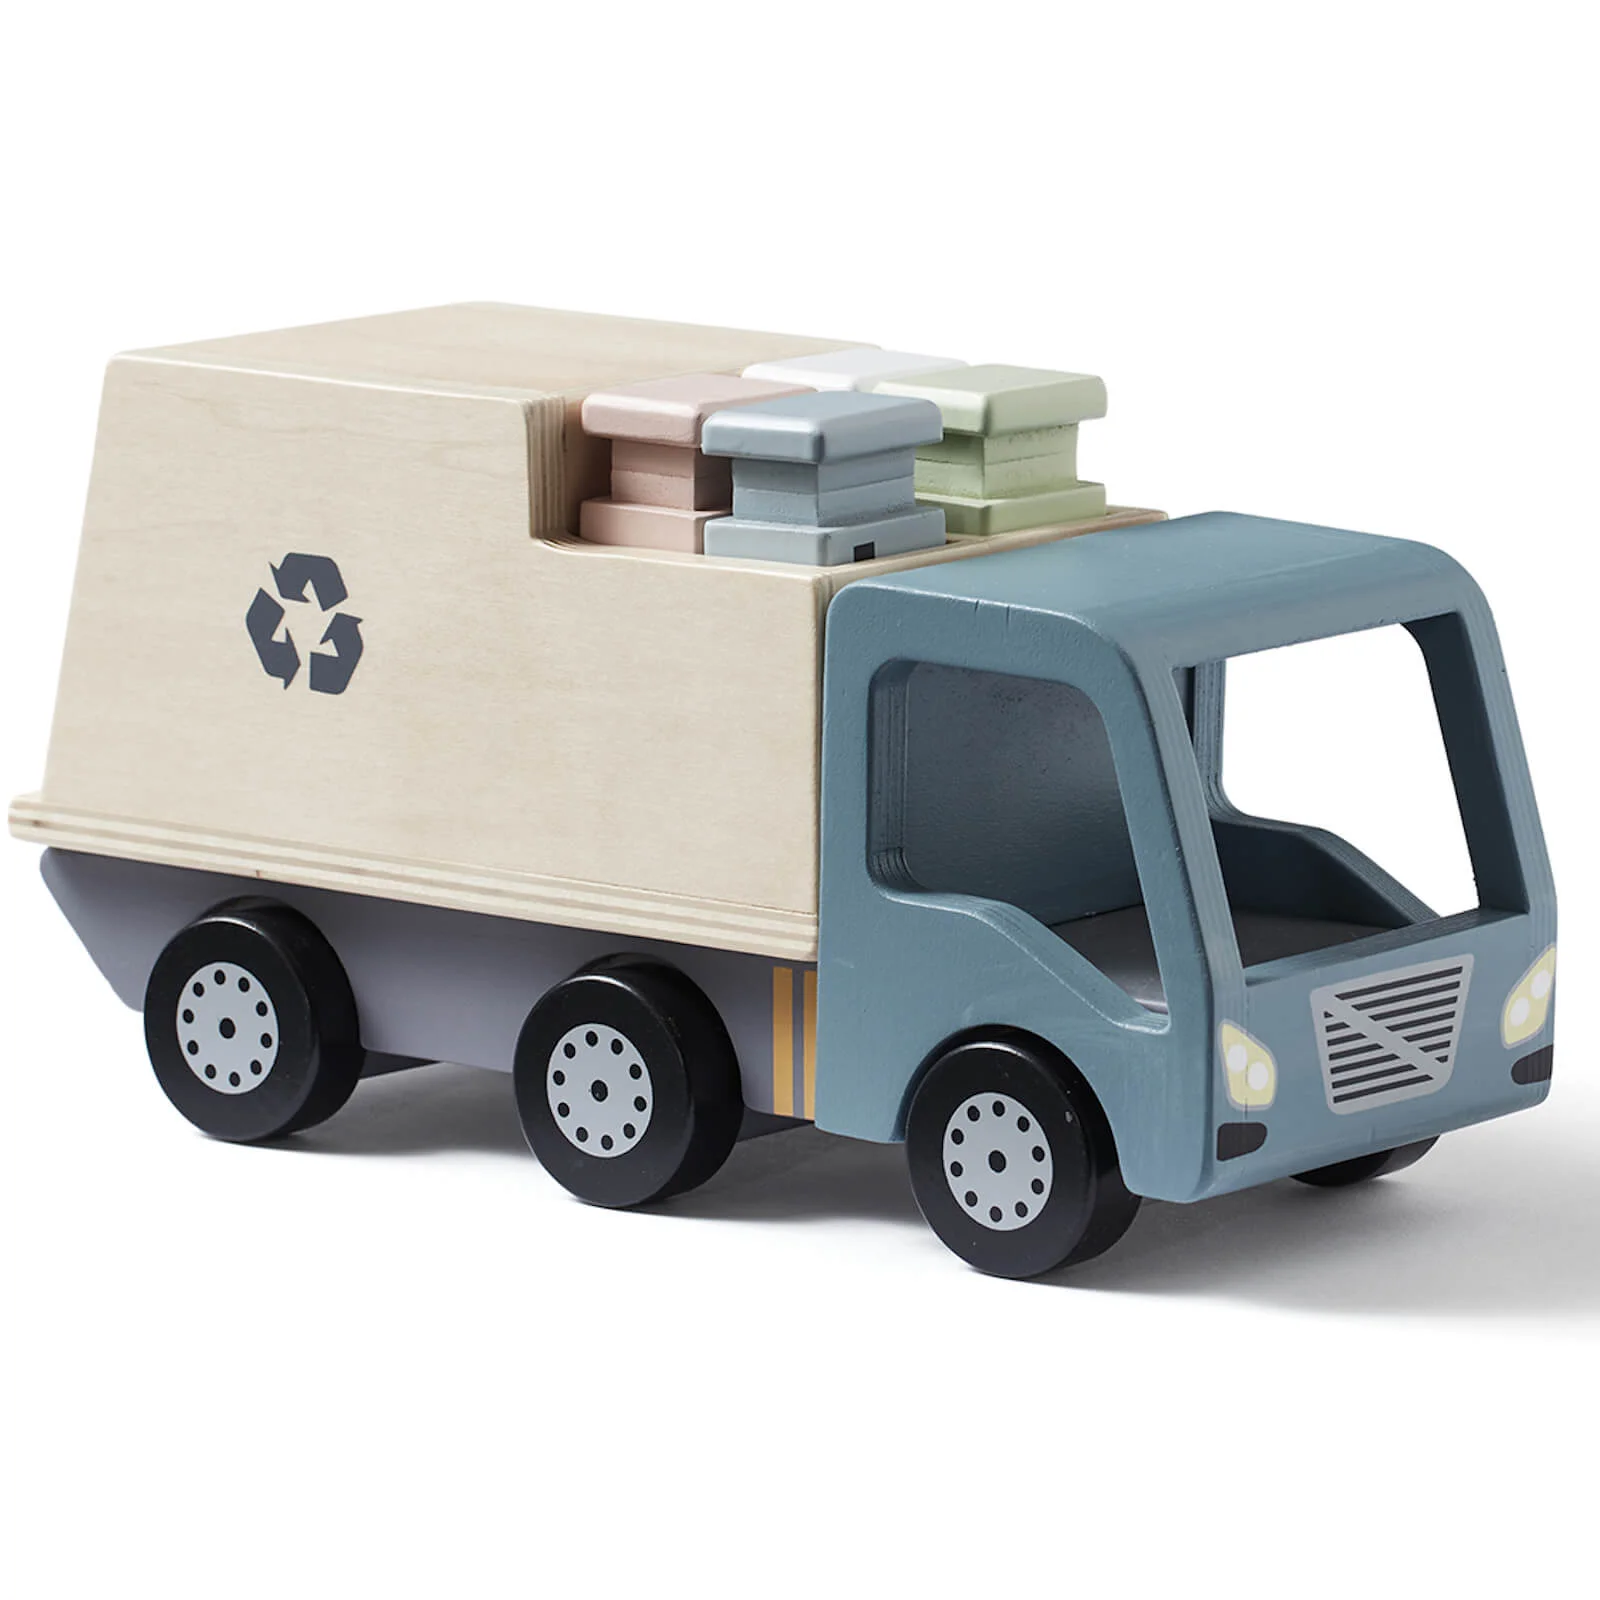 Kids Concept Garbage Truck - Grey Image 1